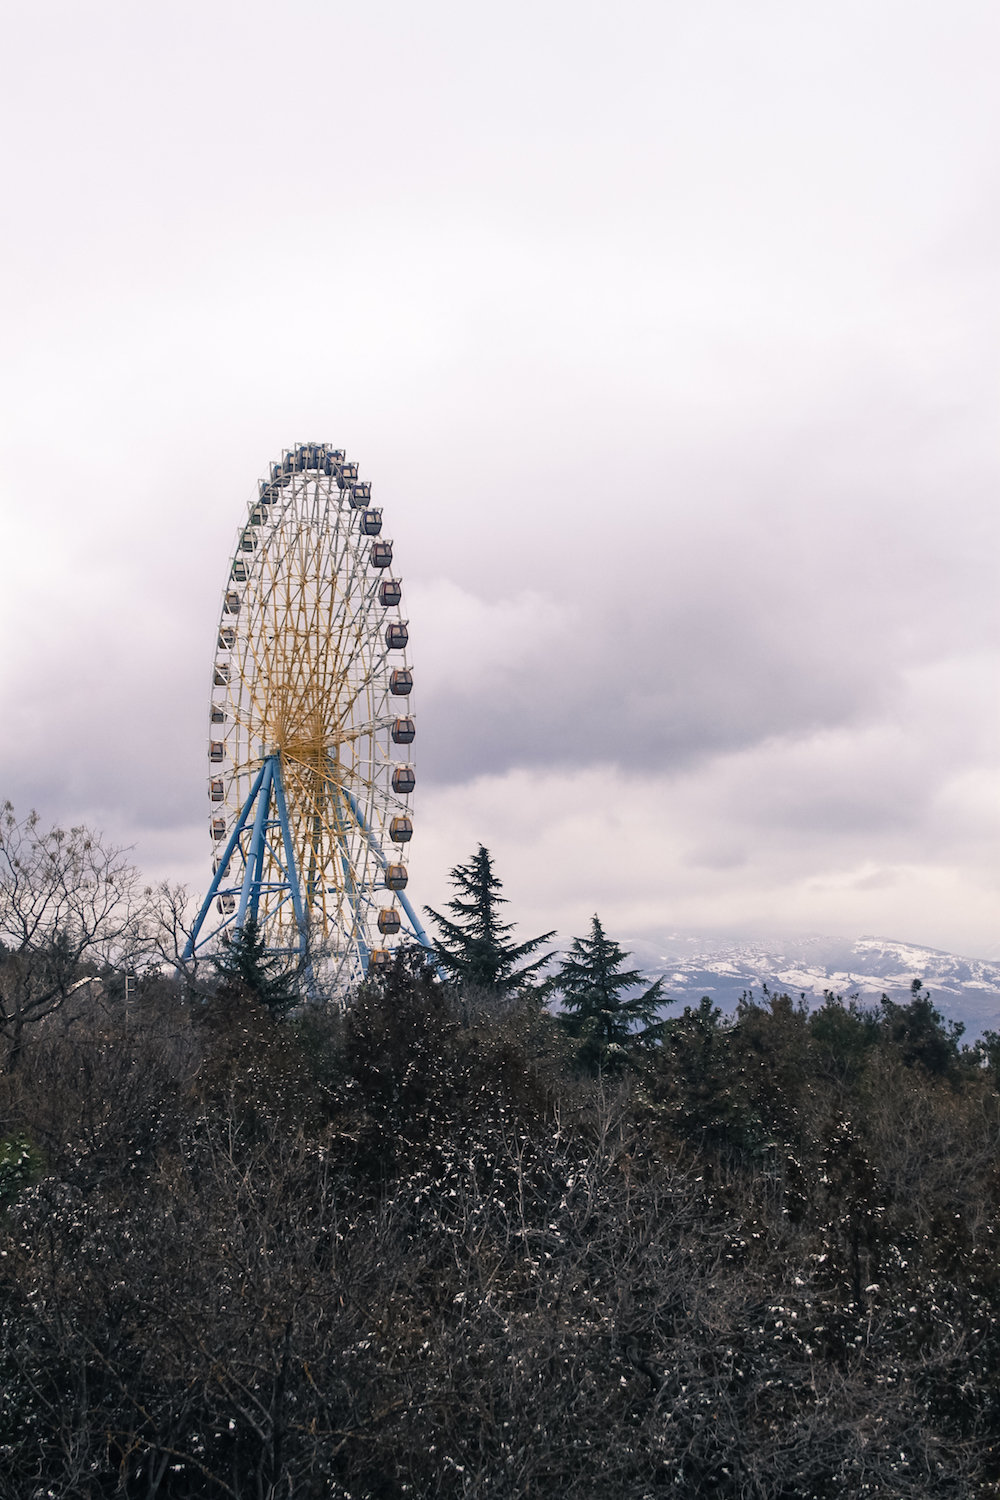 Ferris Wheel in Tbilisi (Eat Me. Drink Me.)